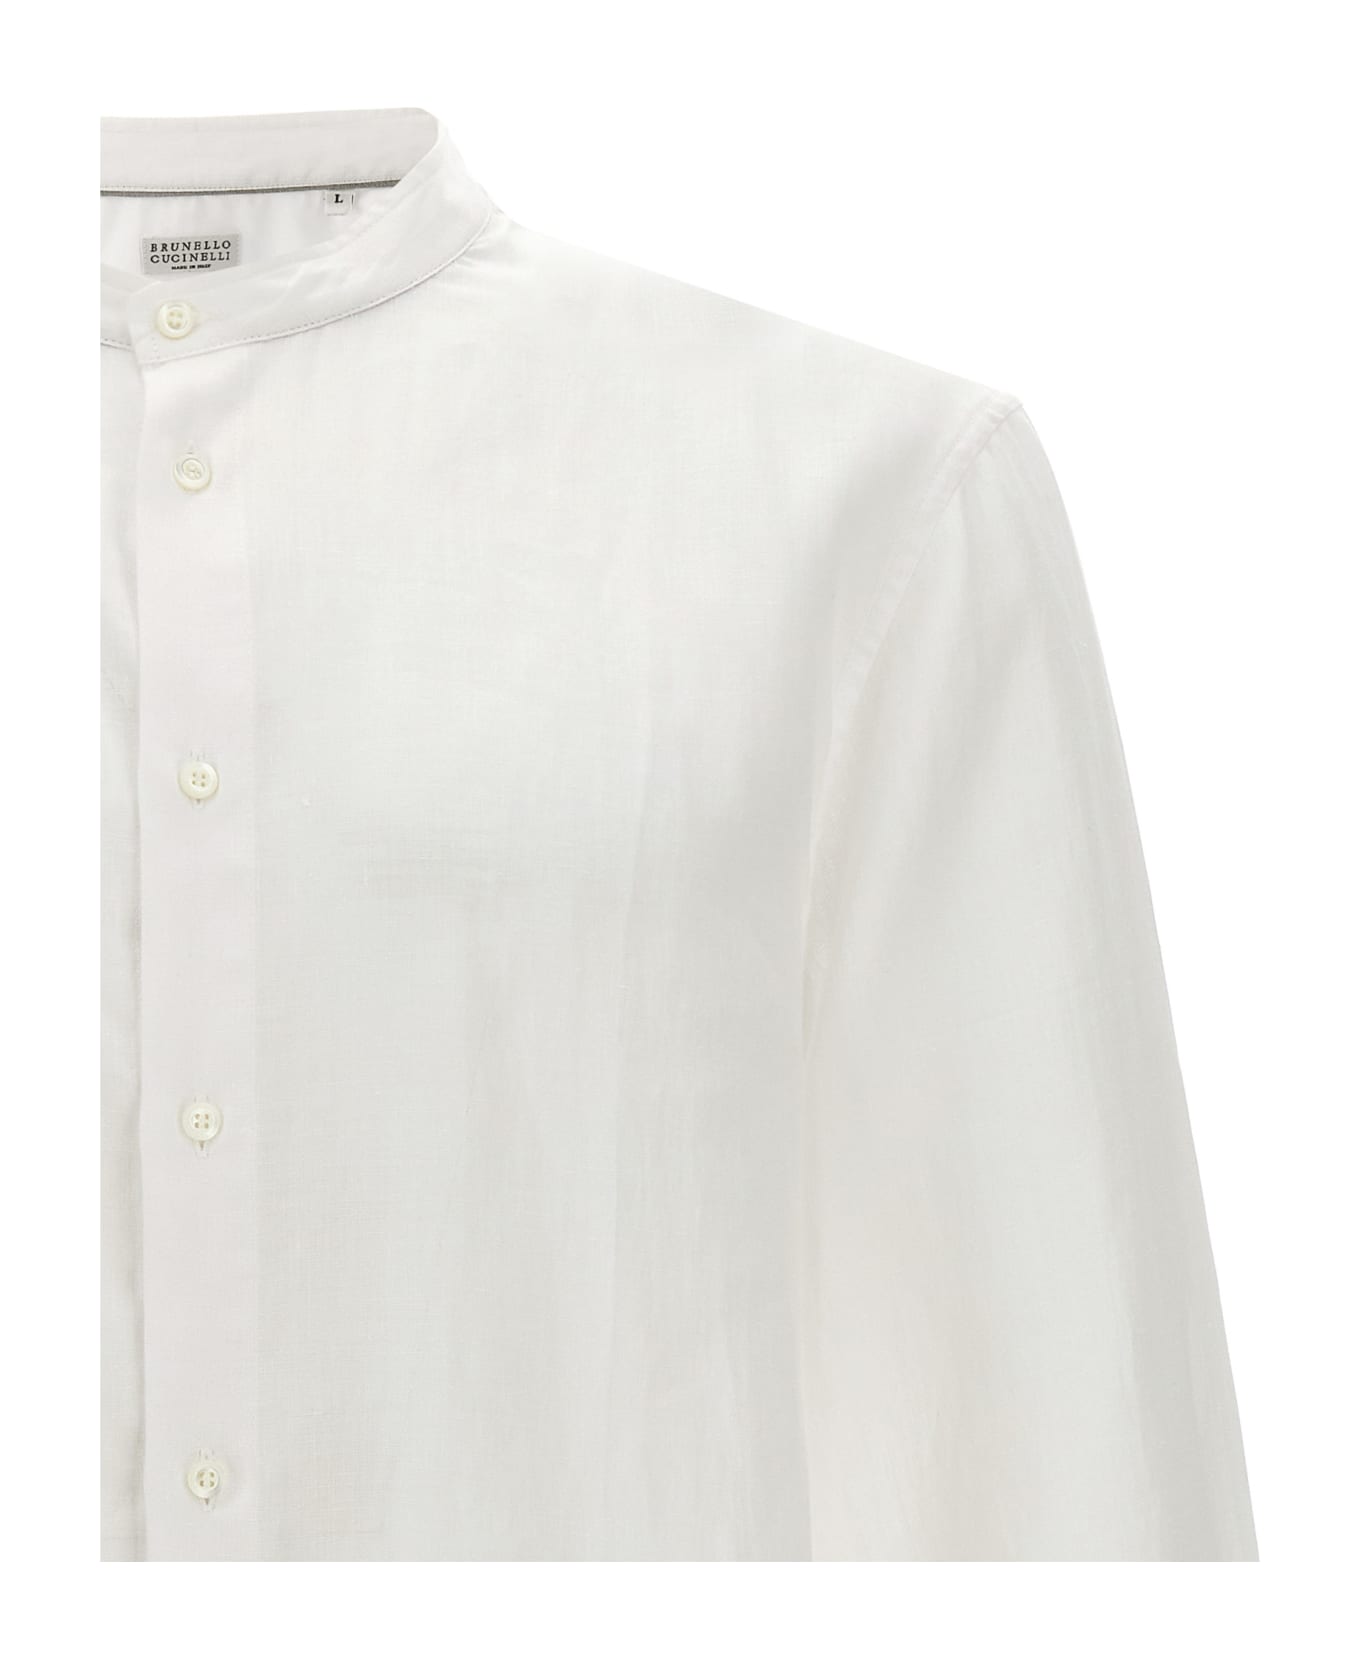 Brunello Cucinelli Korean Shirt - White